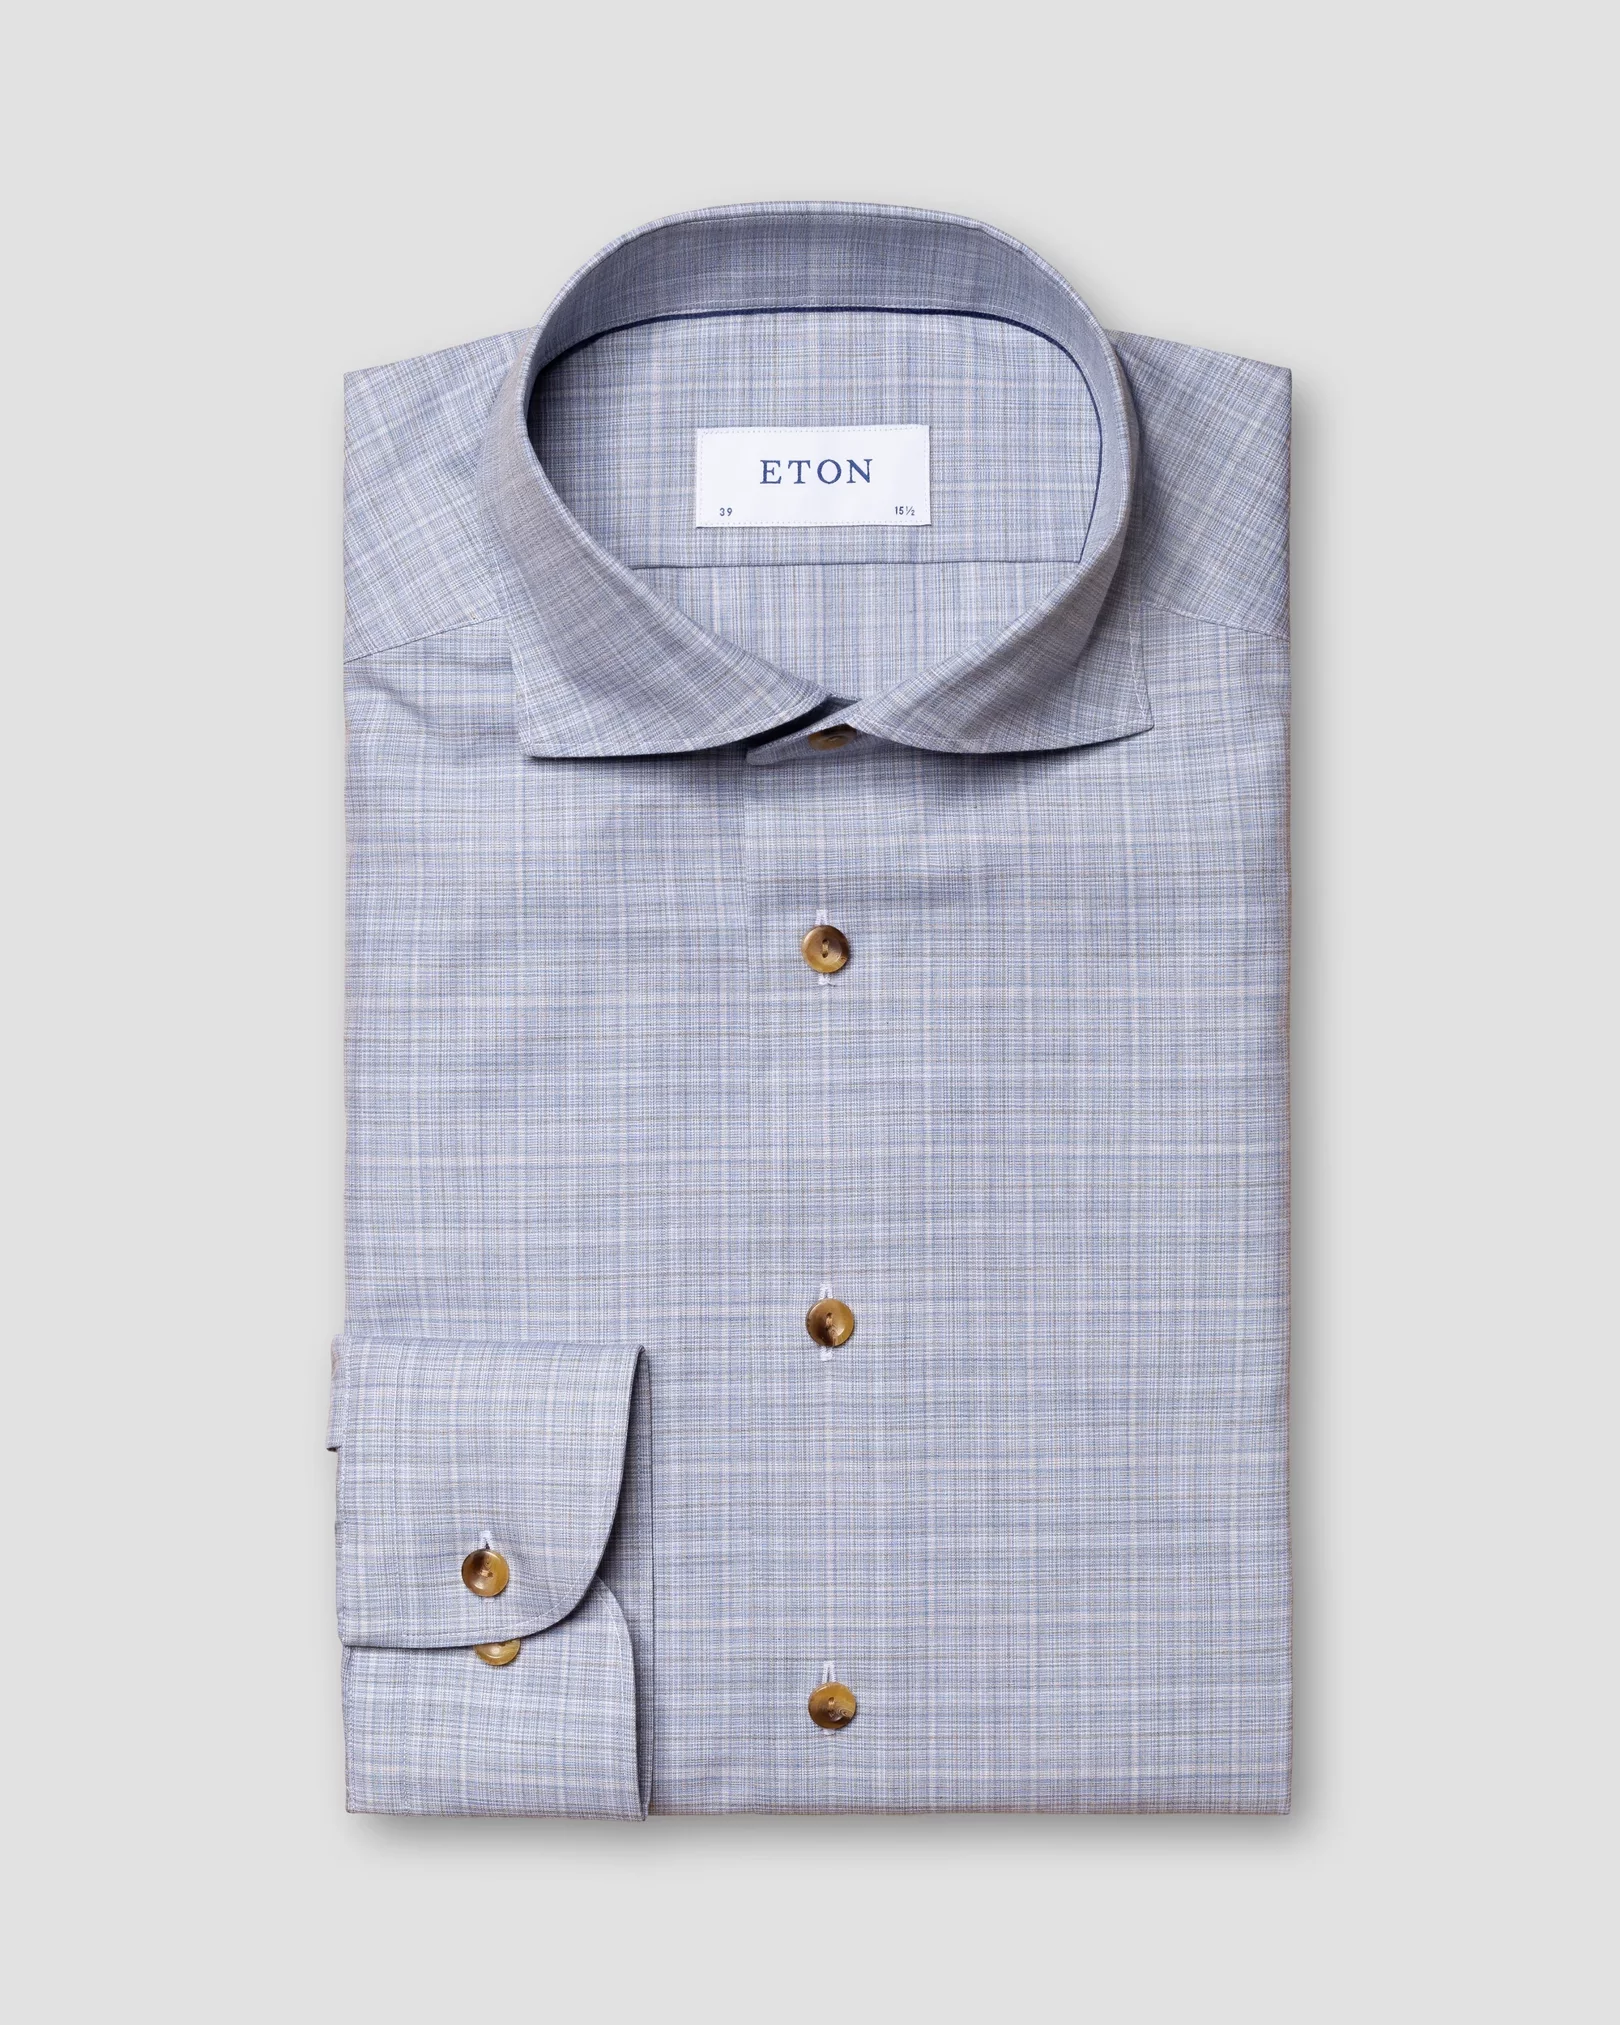 Eton - blue plaid fine twill shirt wide spread single rounded slim